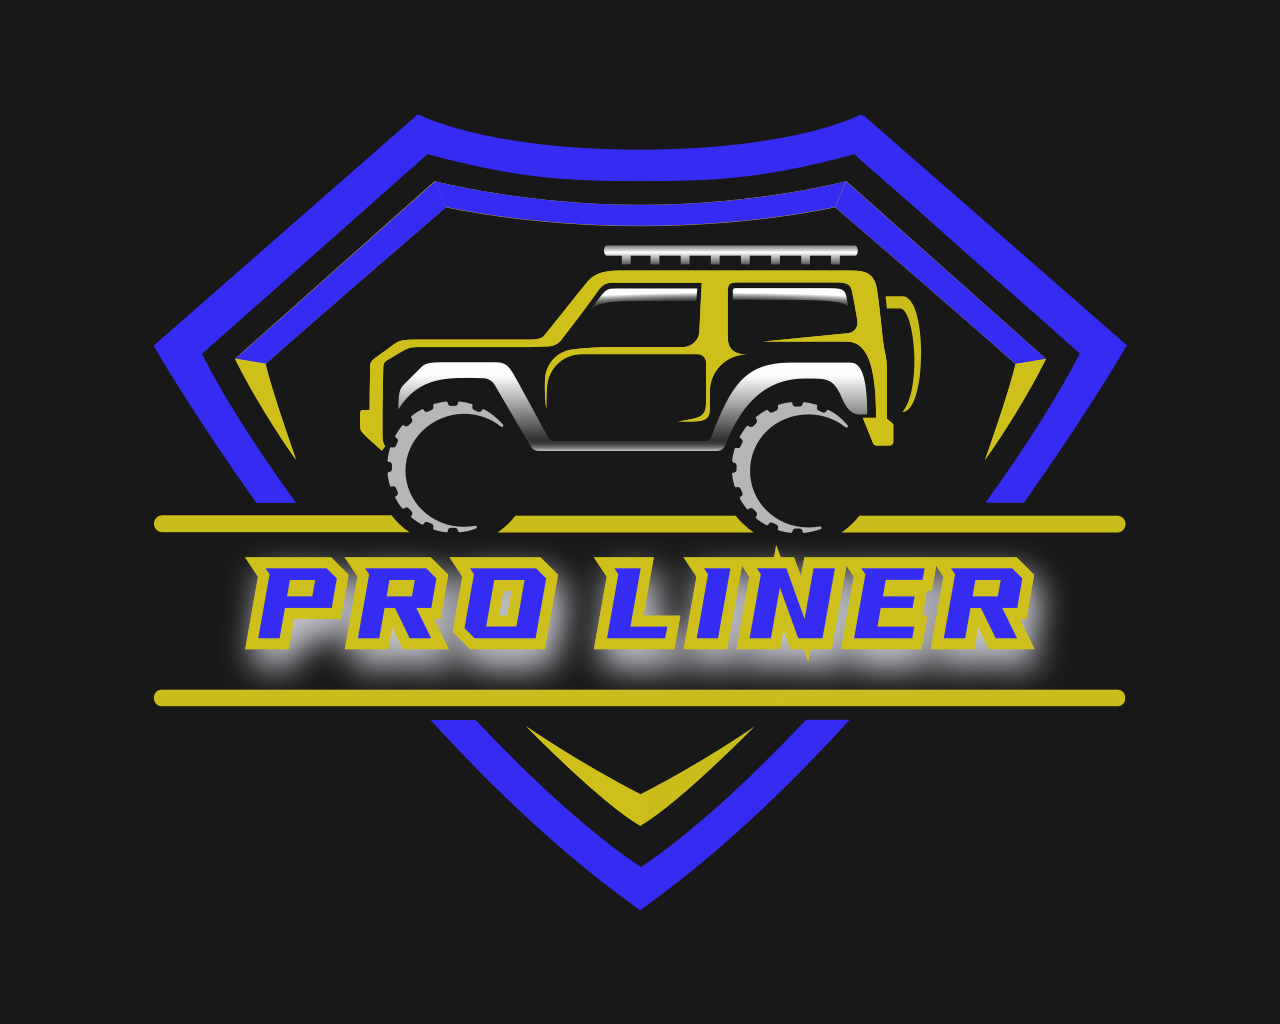 Pro Liner's logo